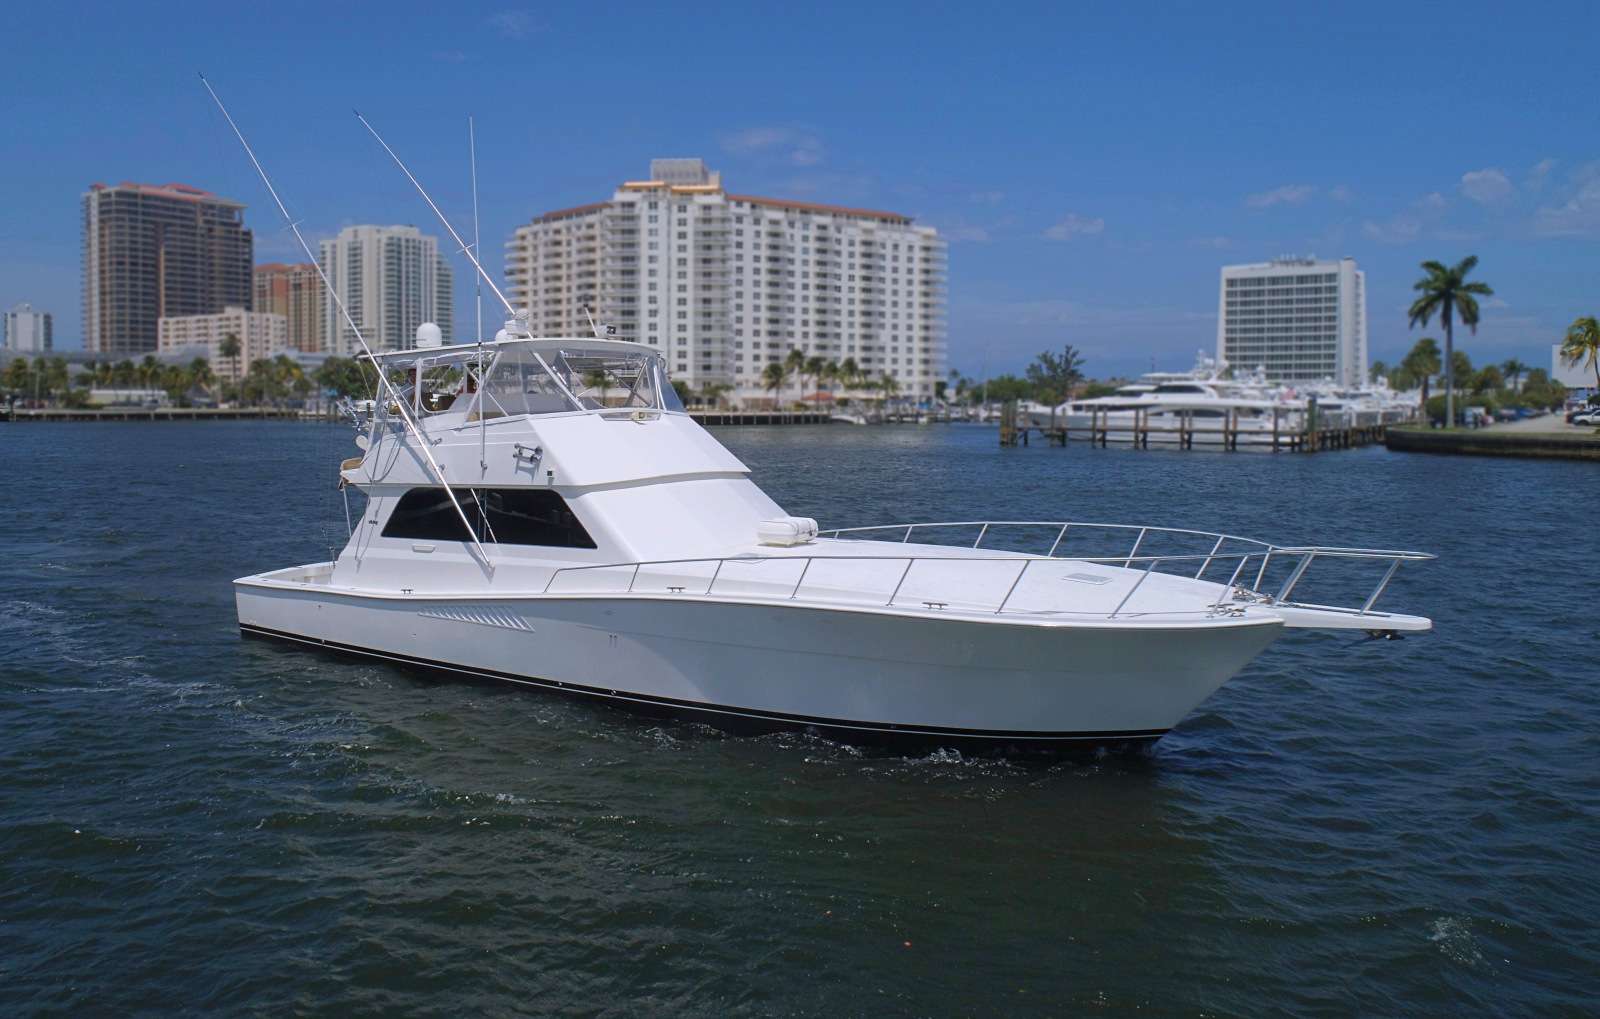 miss kethleen - Motor Boat Charter USA & Boat hire in Florida & Bahamas 1